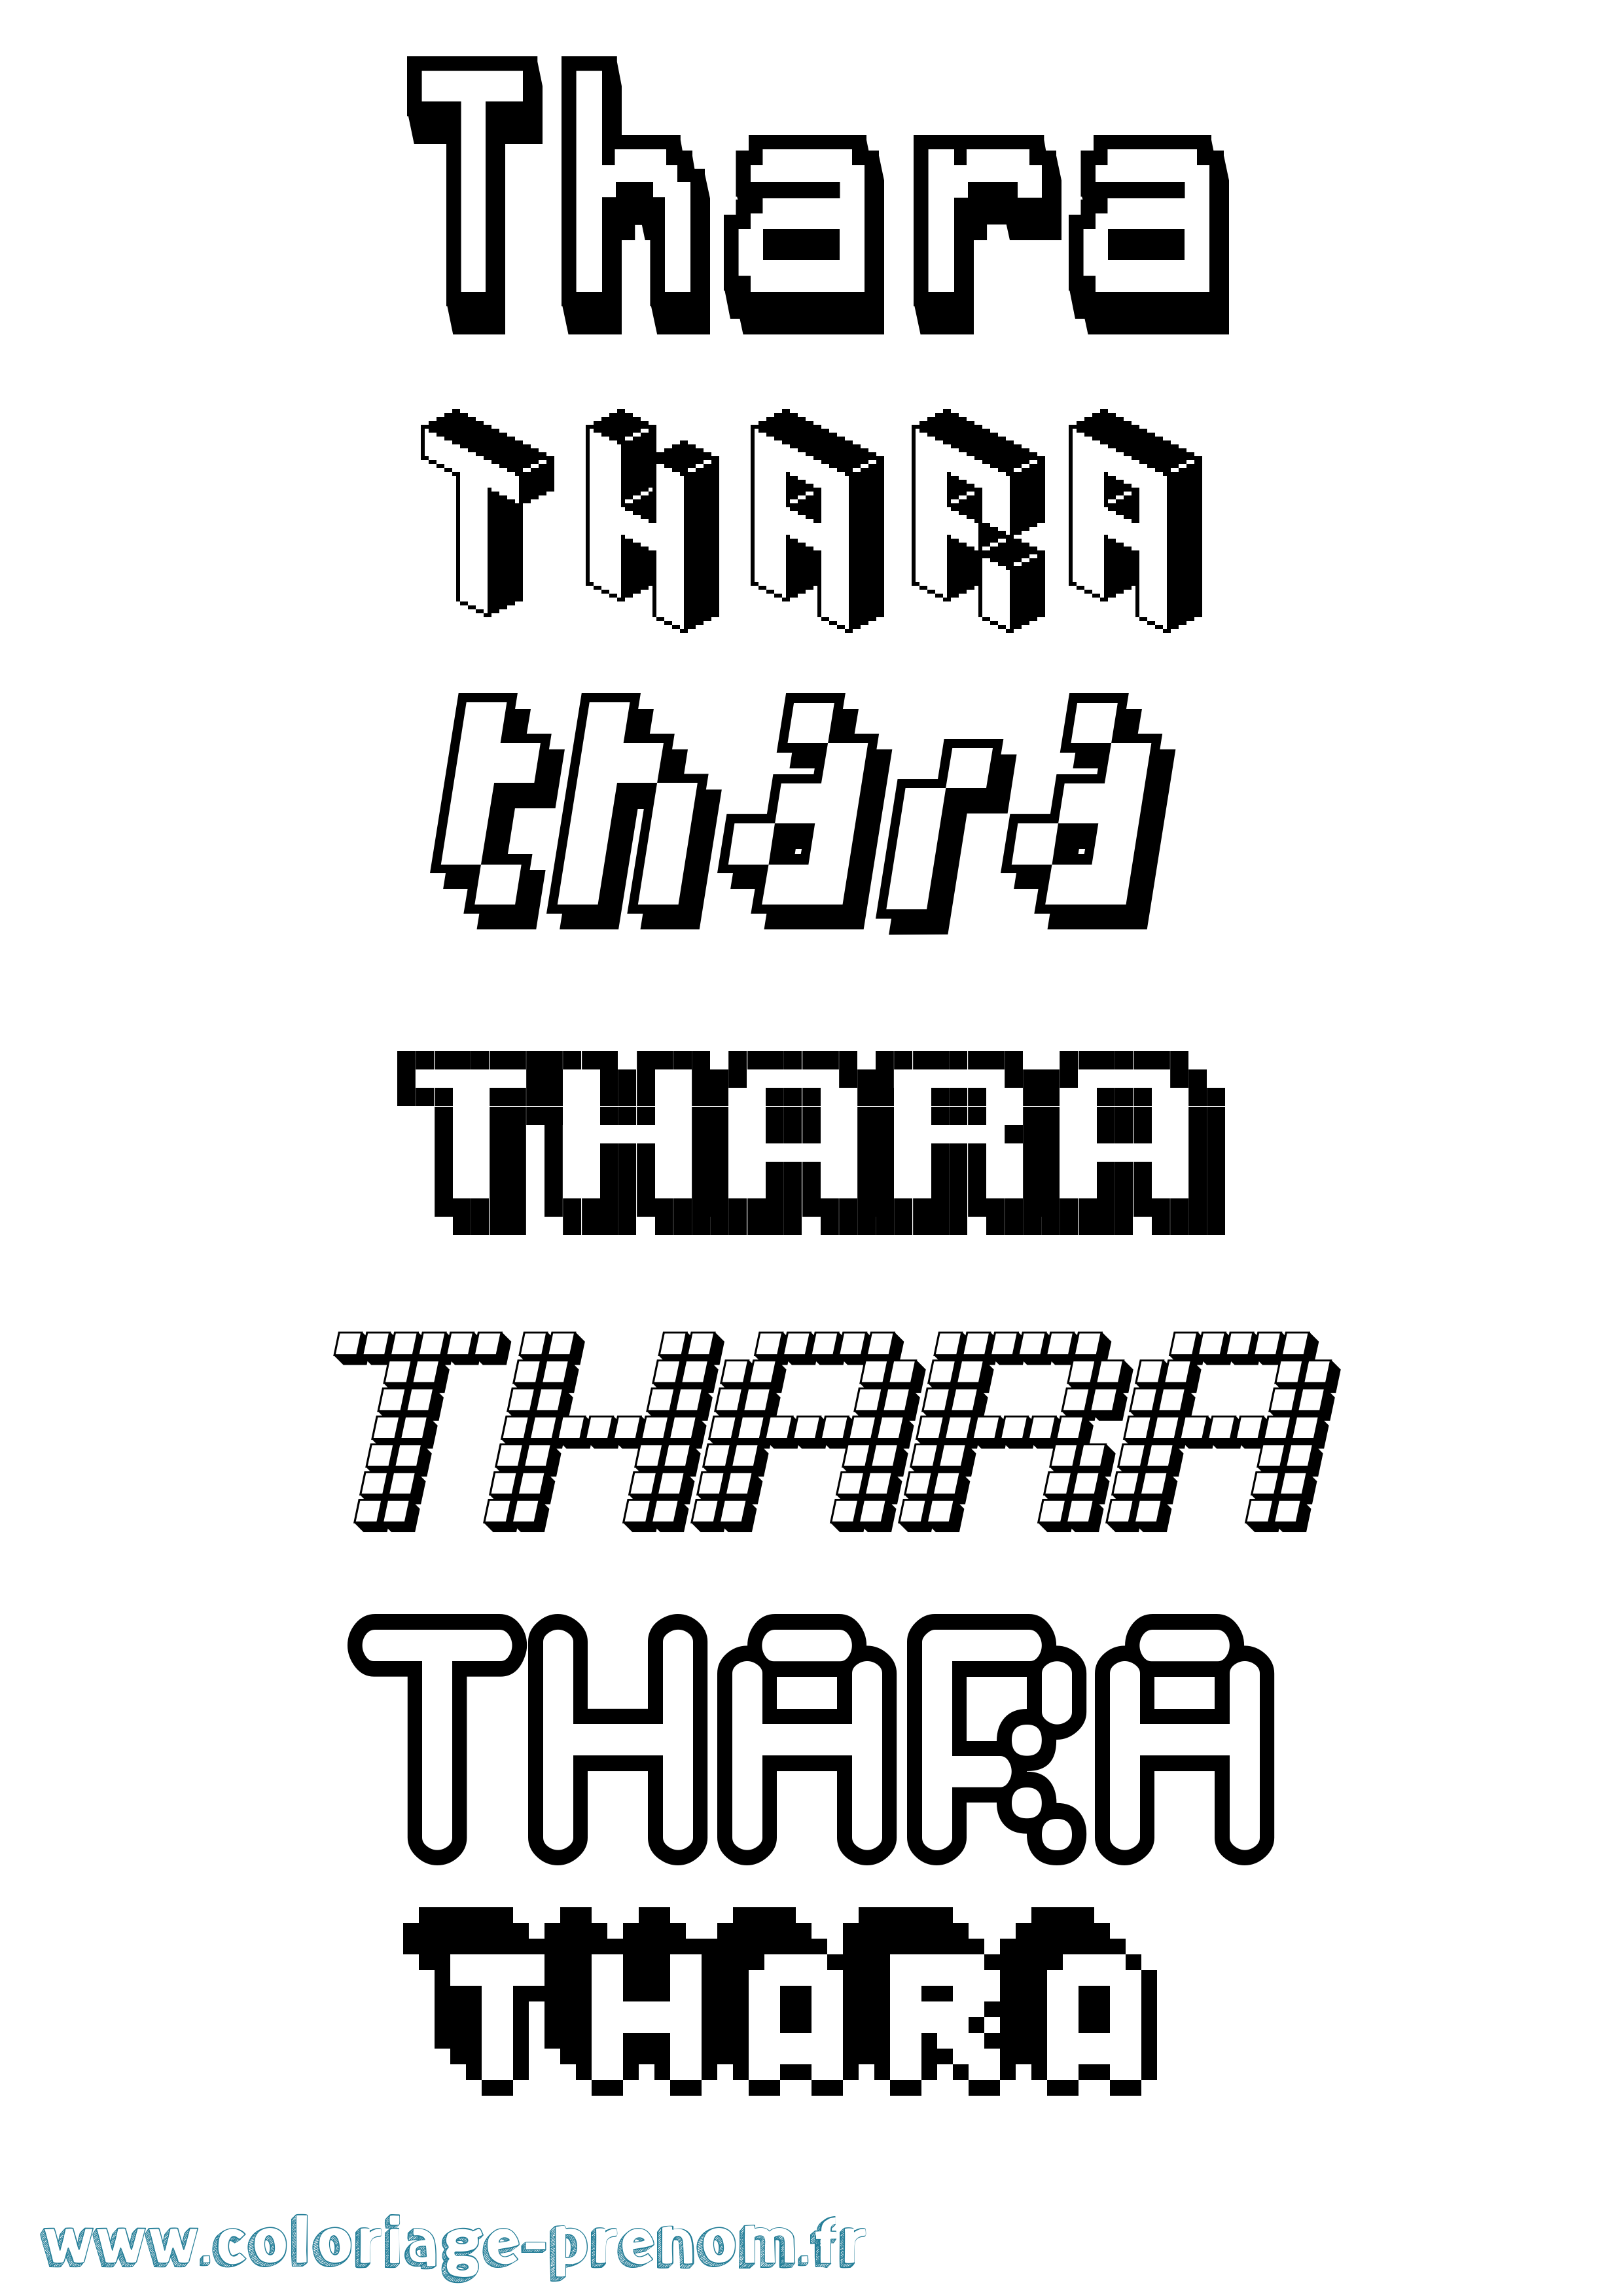 Coloriage prénom Thara Pixel